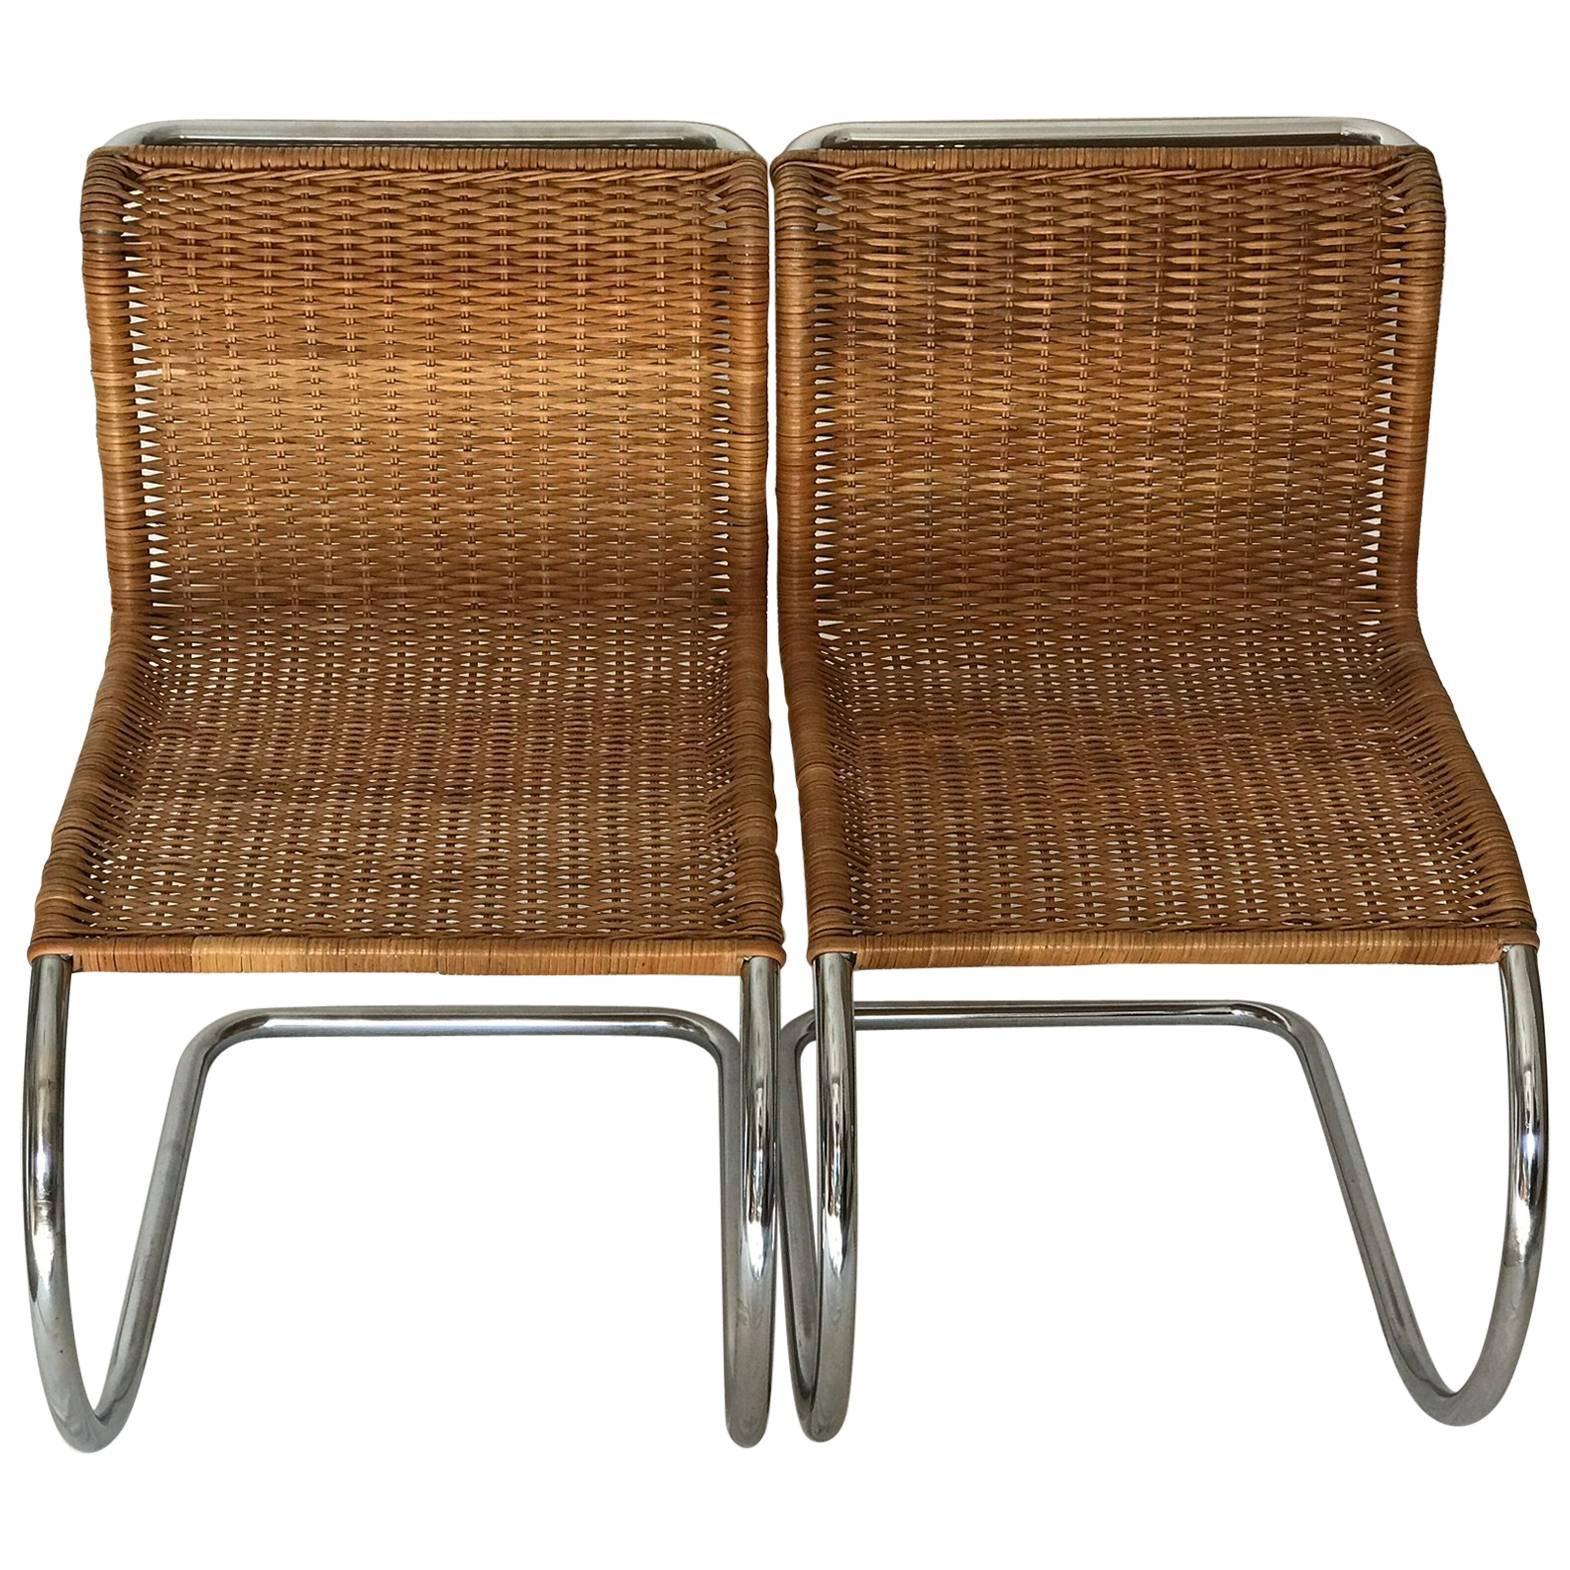 Ludwig Mies van der Rohe chairs "1953"